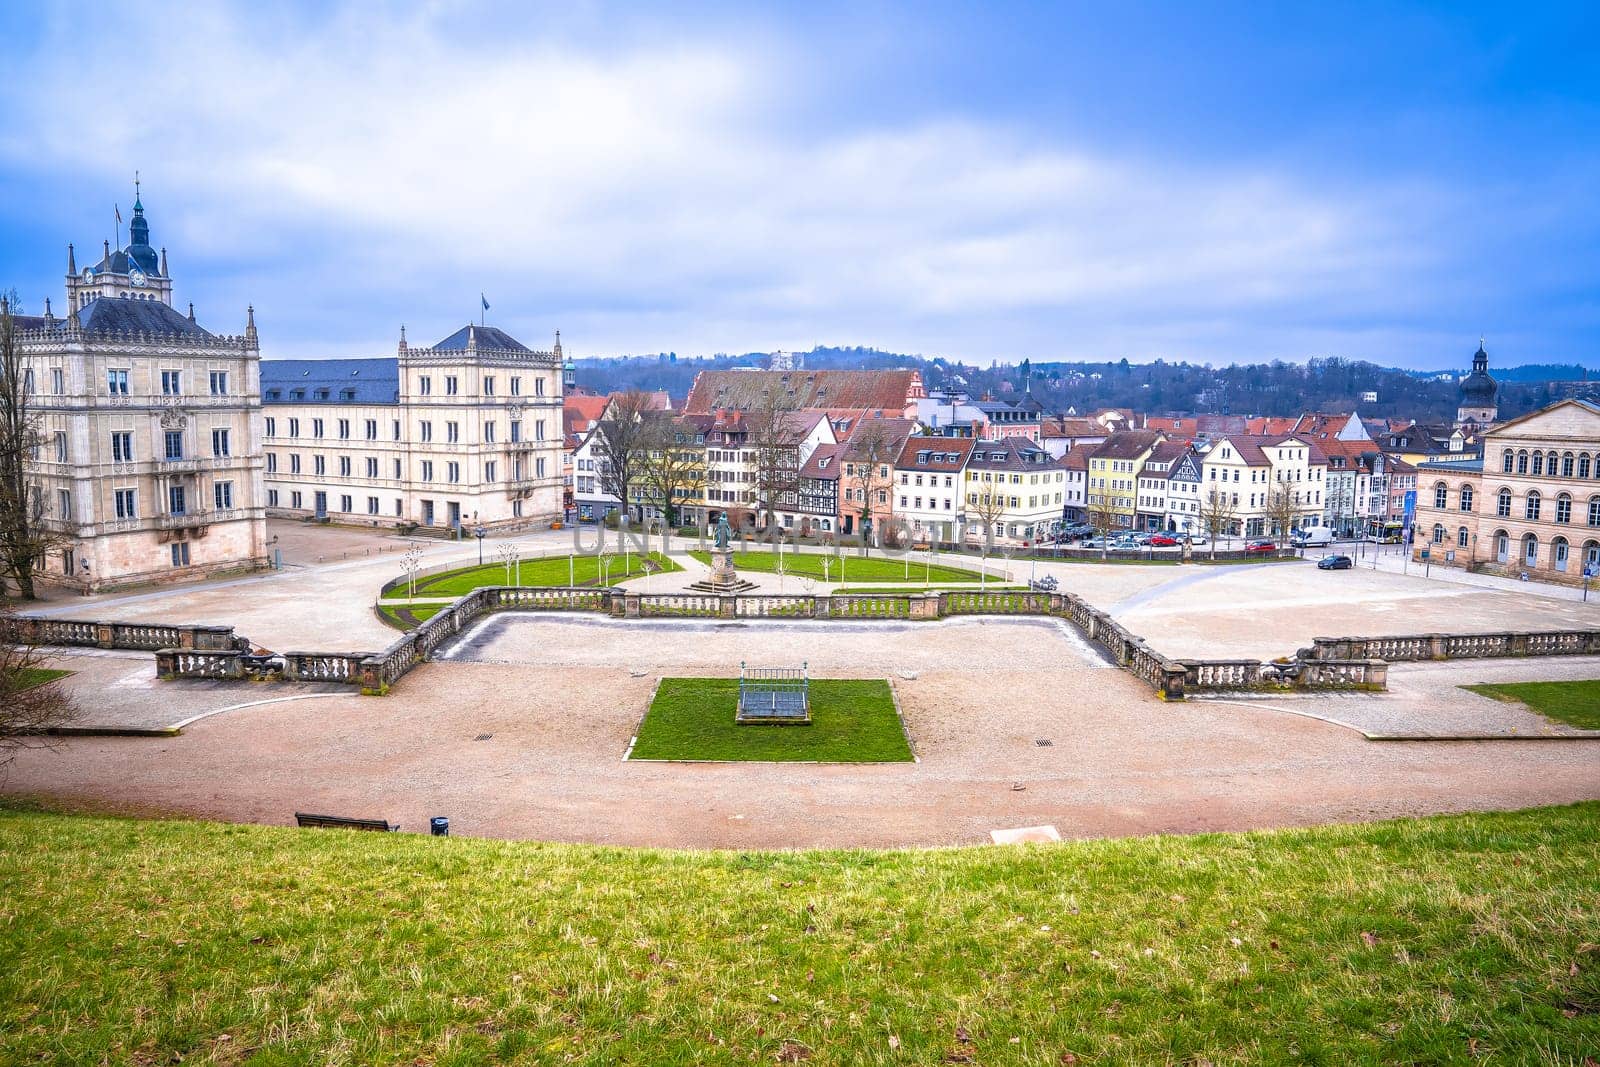 Historic Schlossplatz sqaure in Coburg architecture view, Upper Franconia region of Bavaria, Germany.